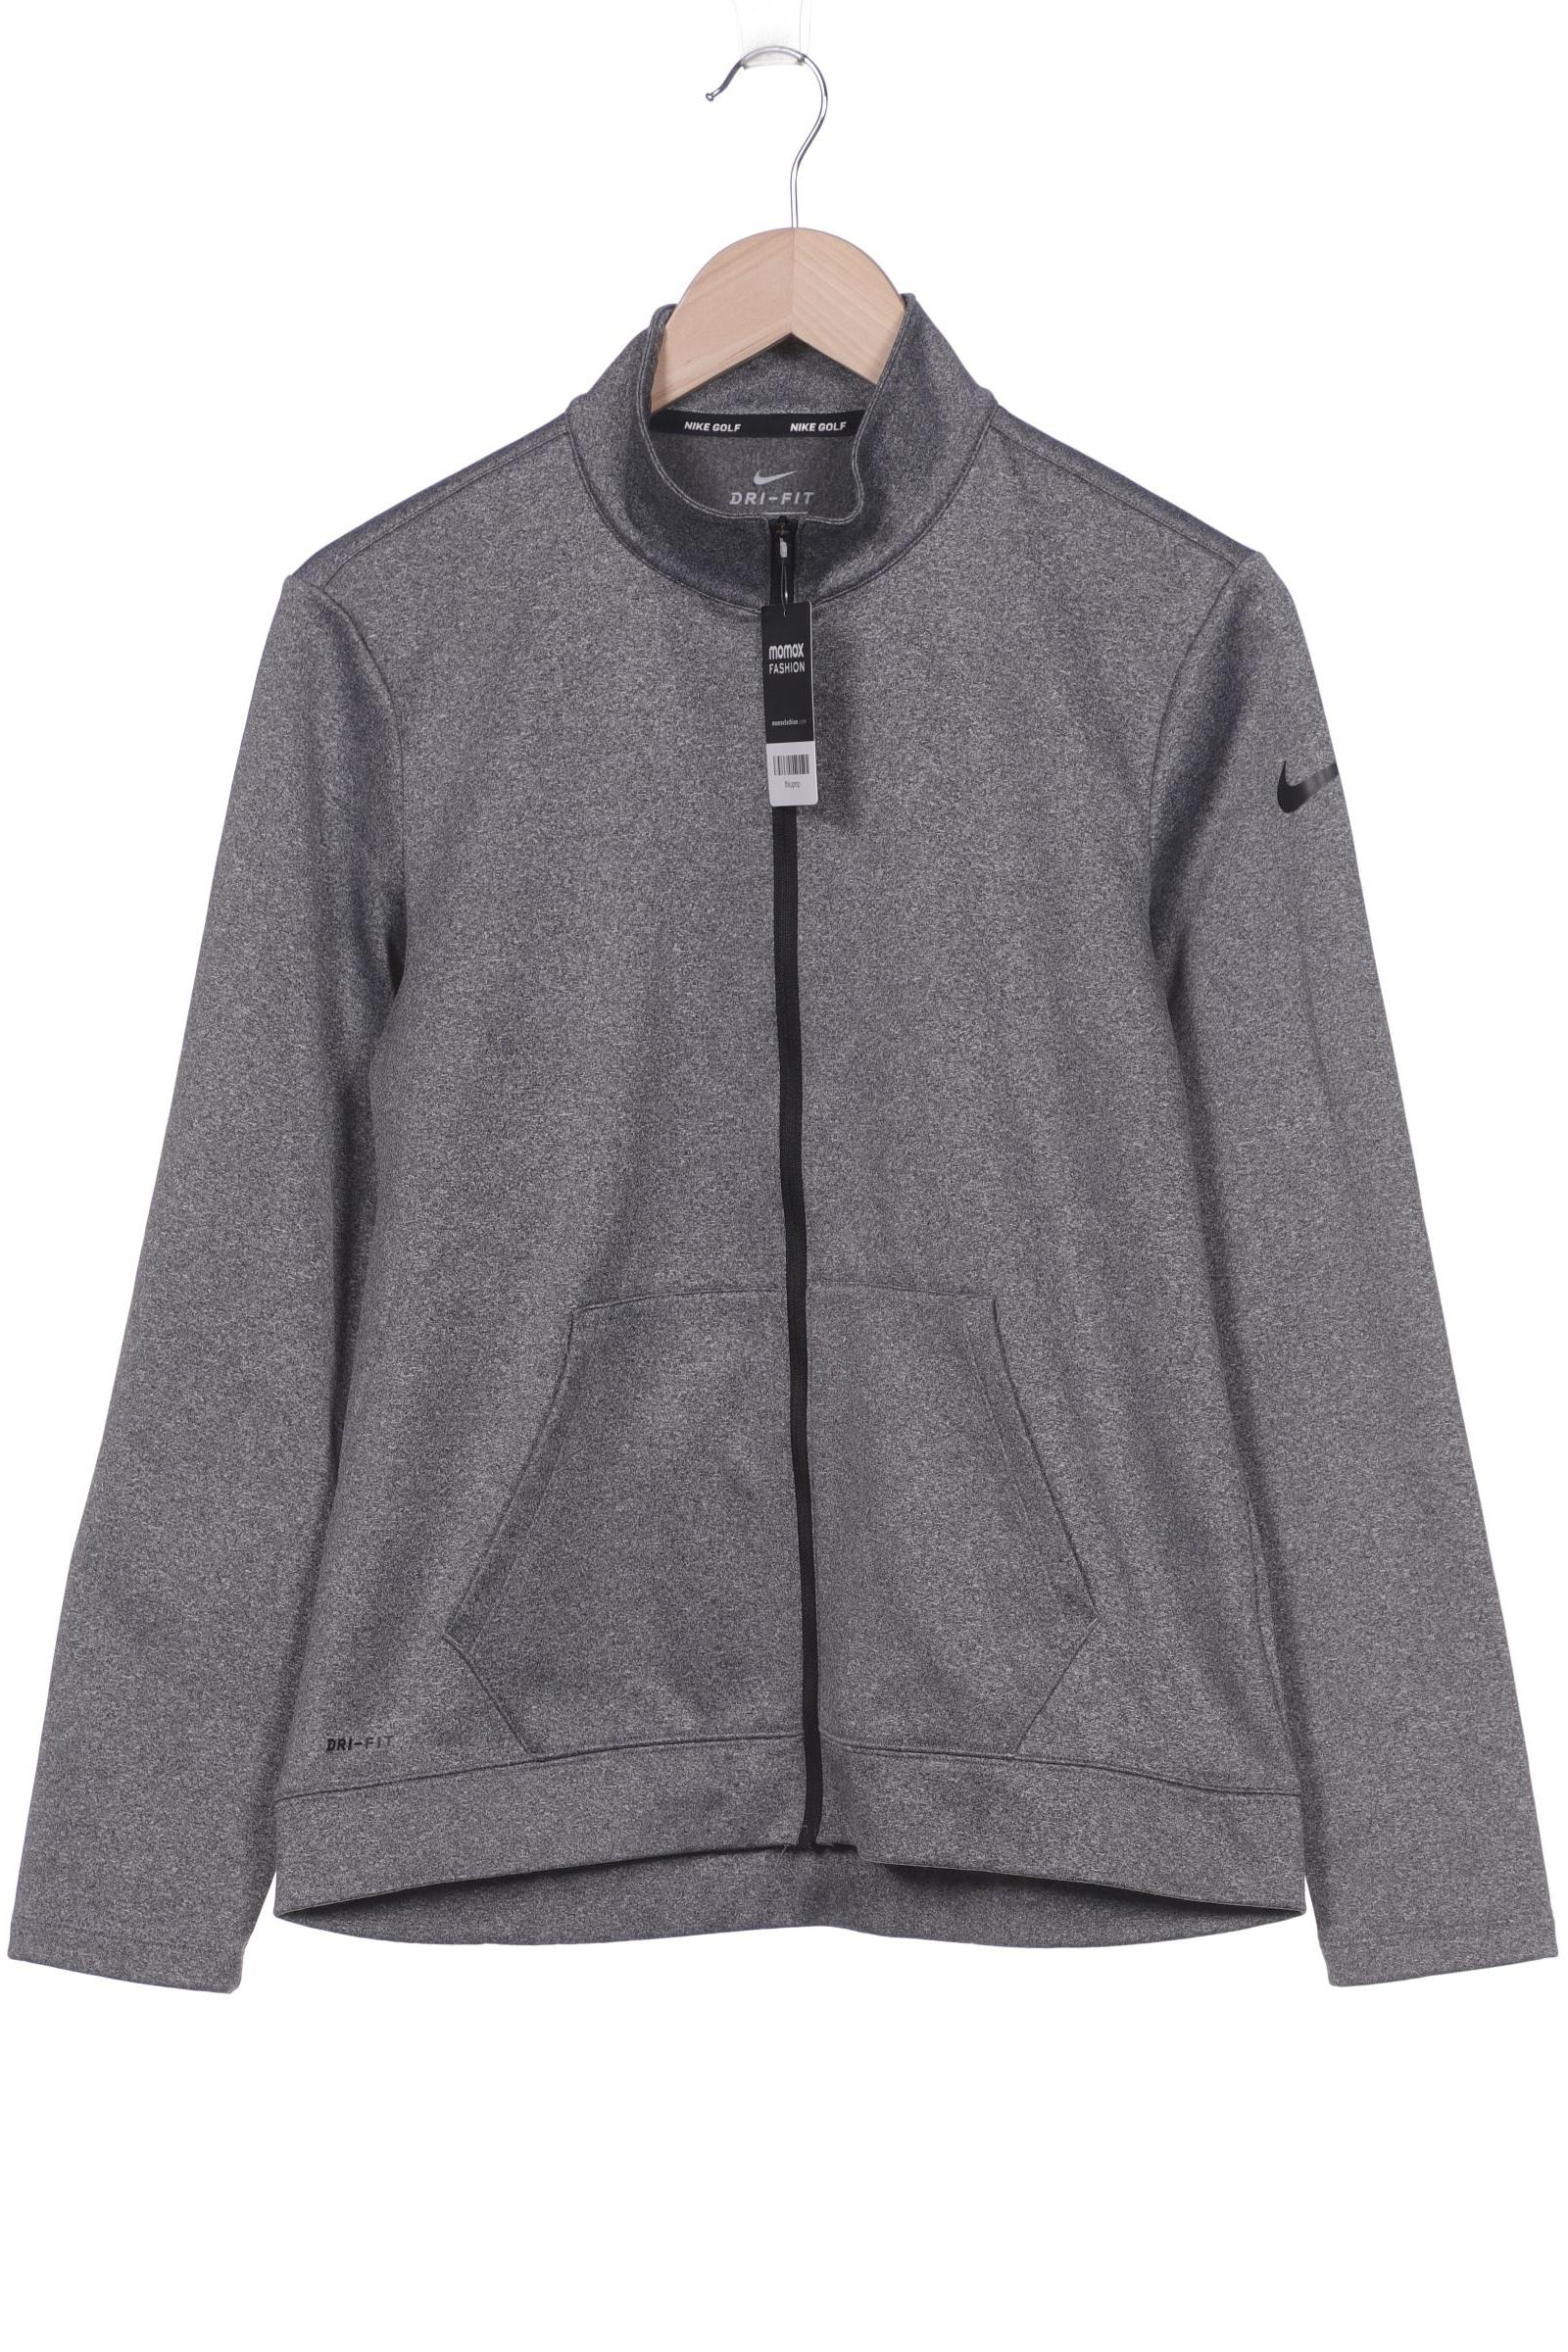 Nike Damen Sweatshirt, grau, Gr. 38 von Nike